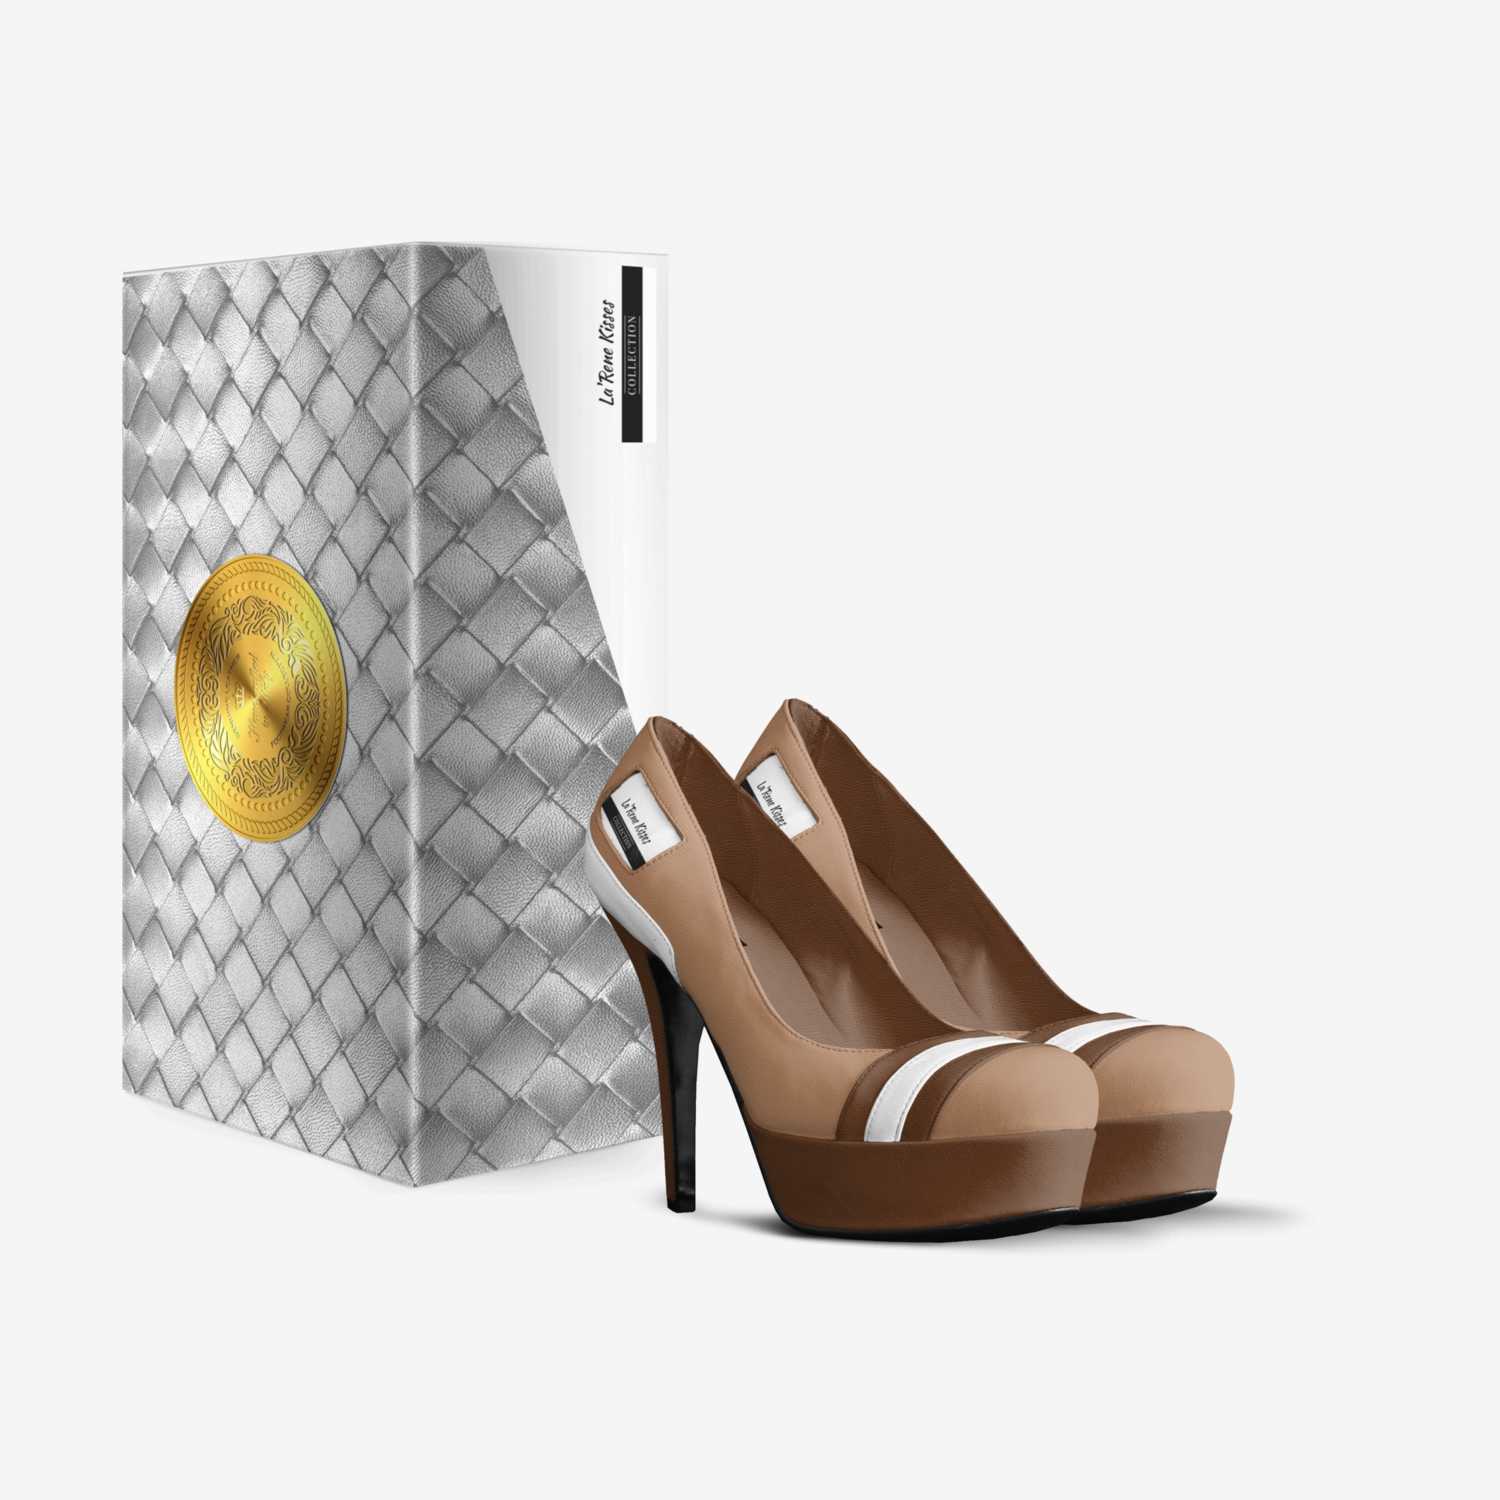 La'Rene Kisses custom made in Italy shoes by Tiara Mason | Box view